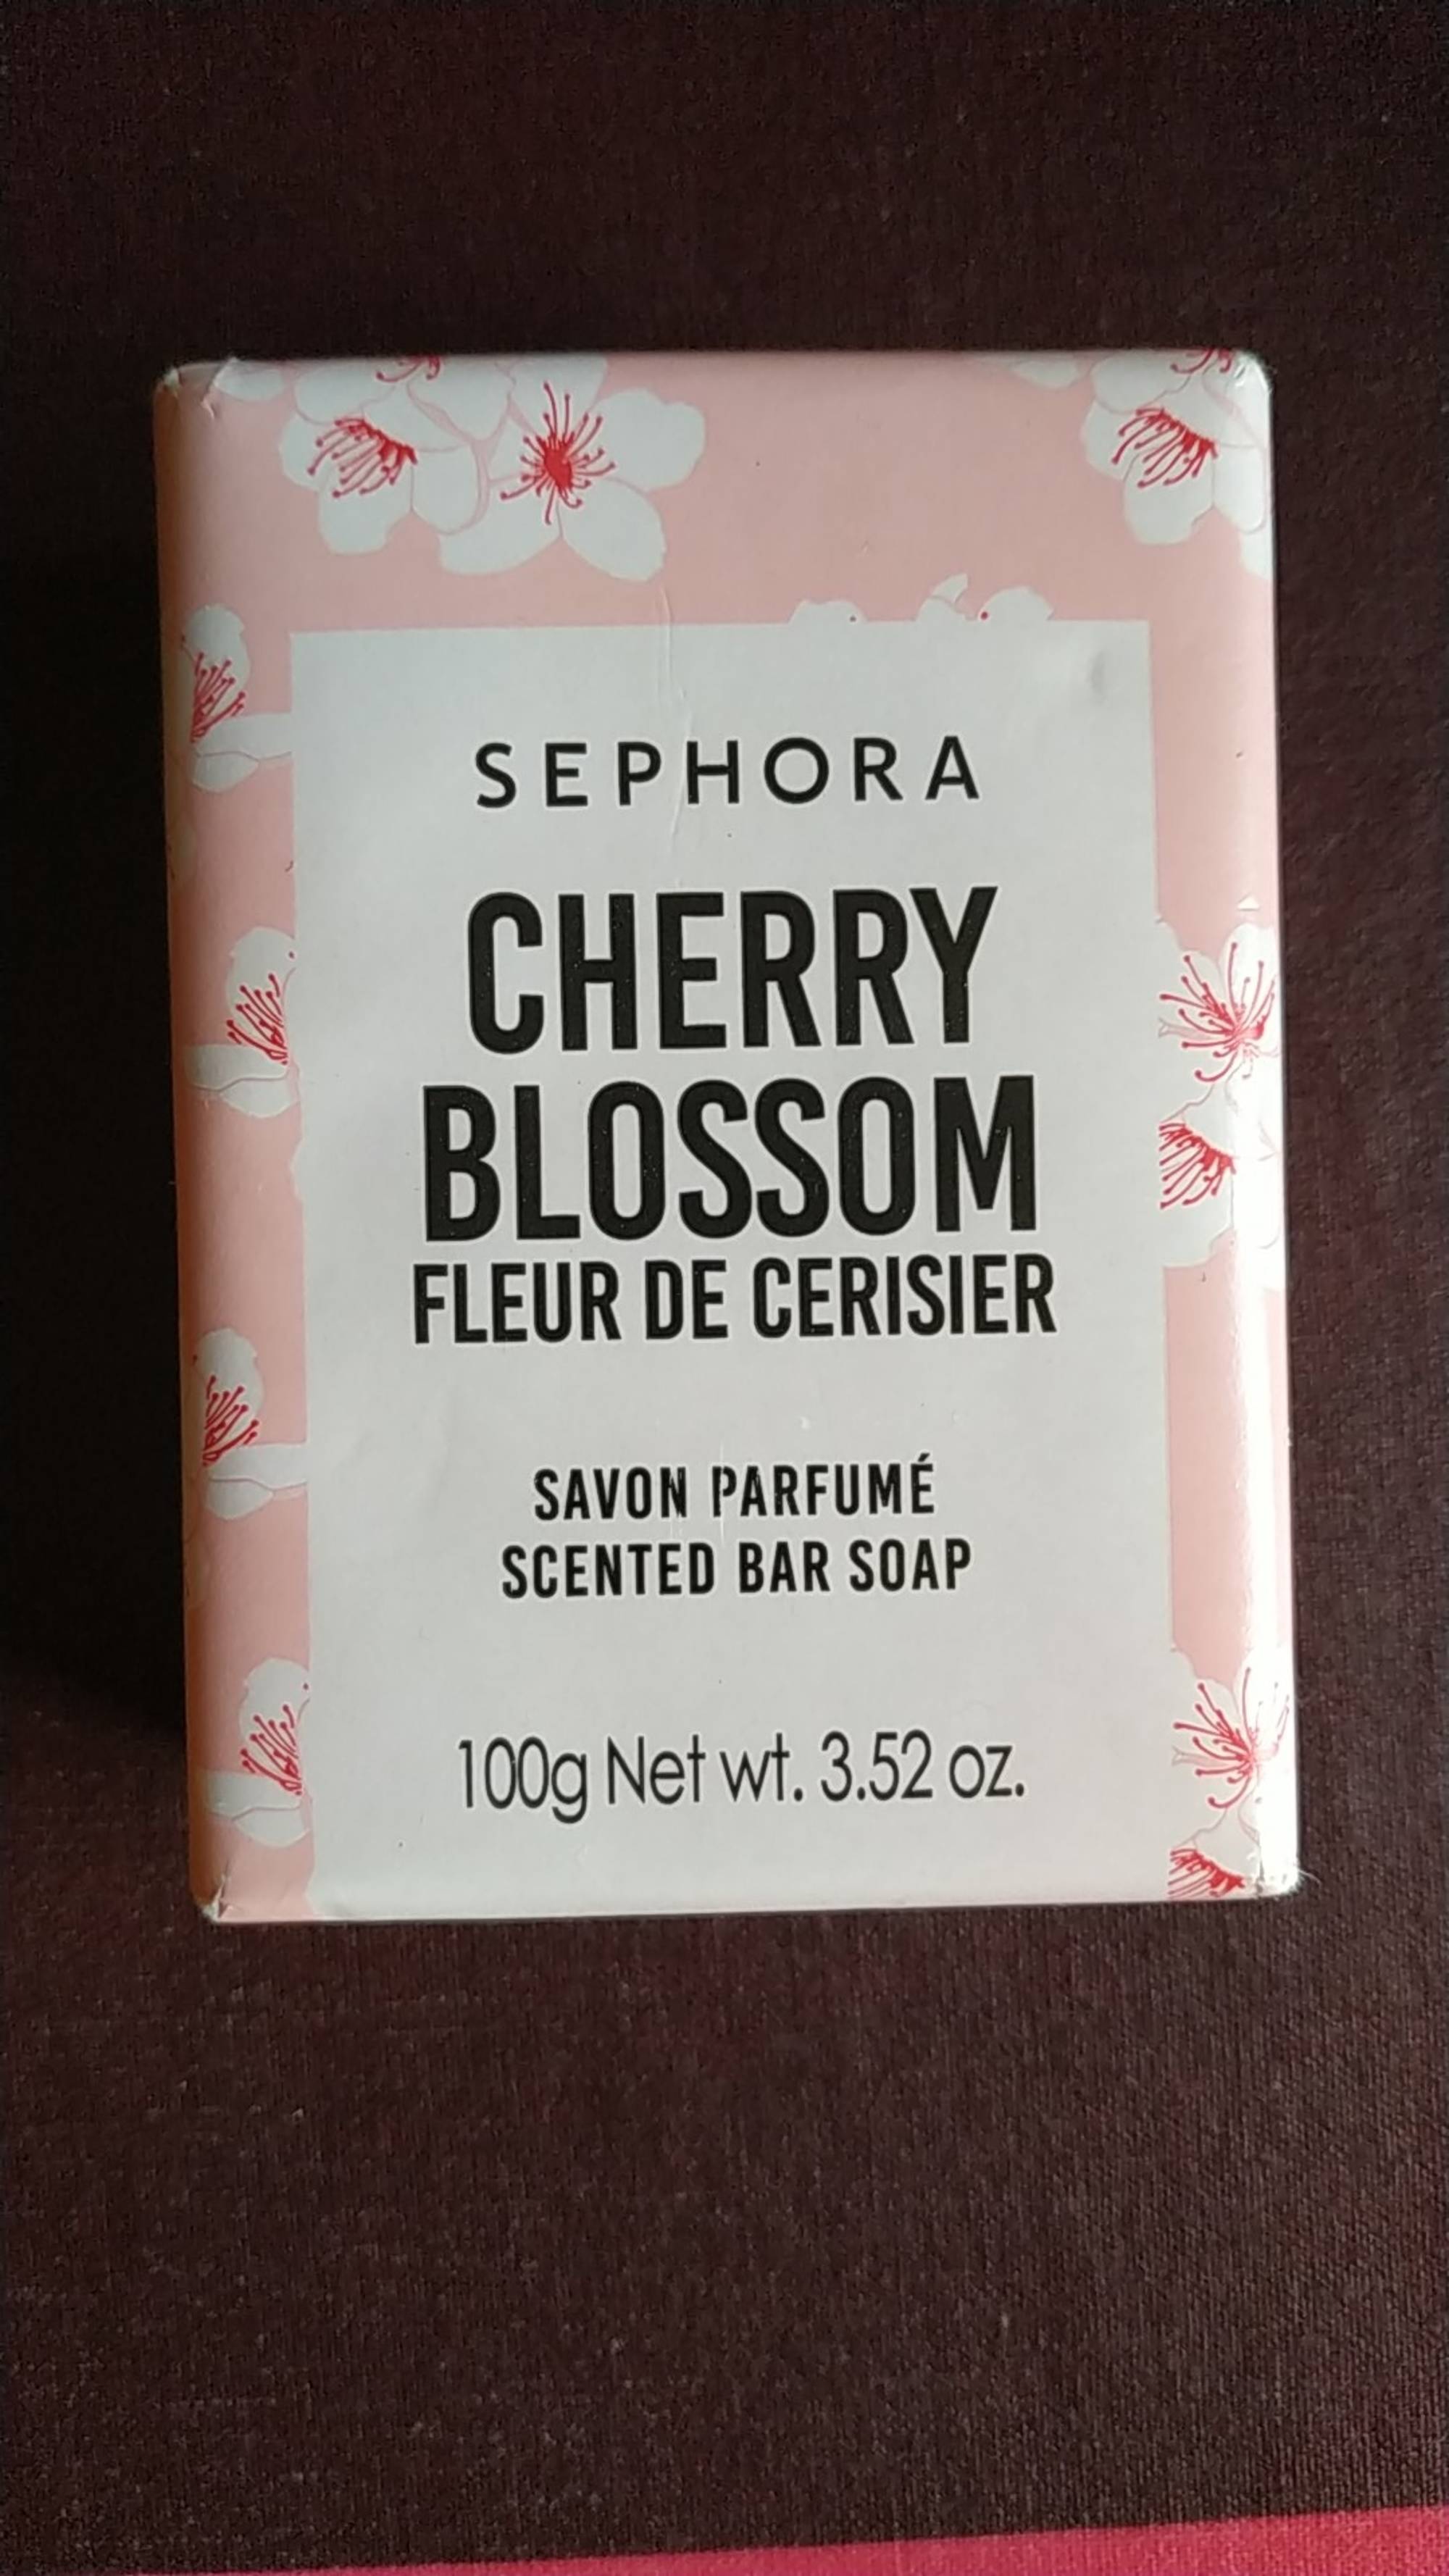 SEPHORA - Fleur de cerisier - Savon parfumé